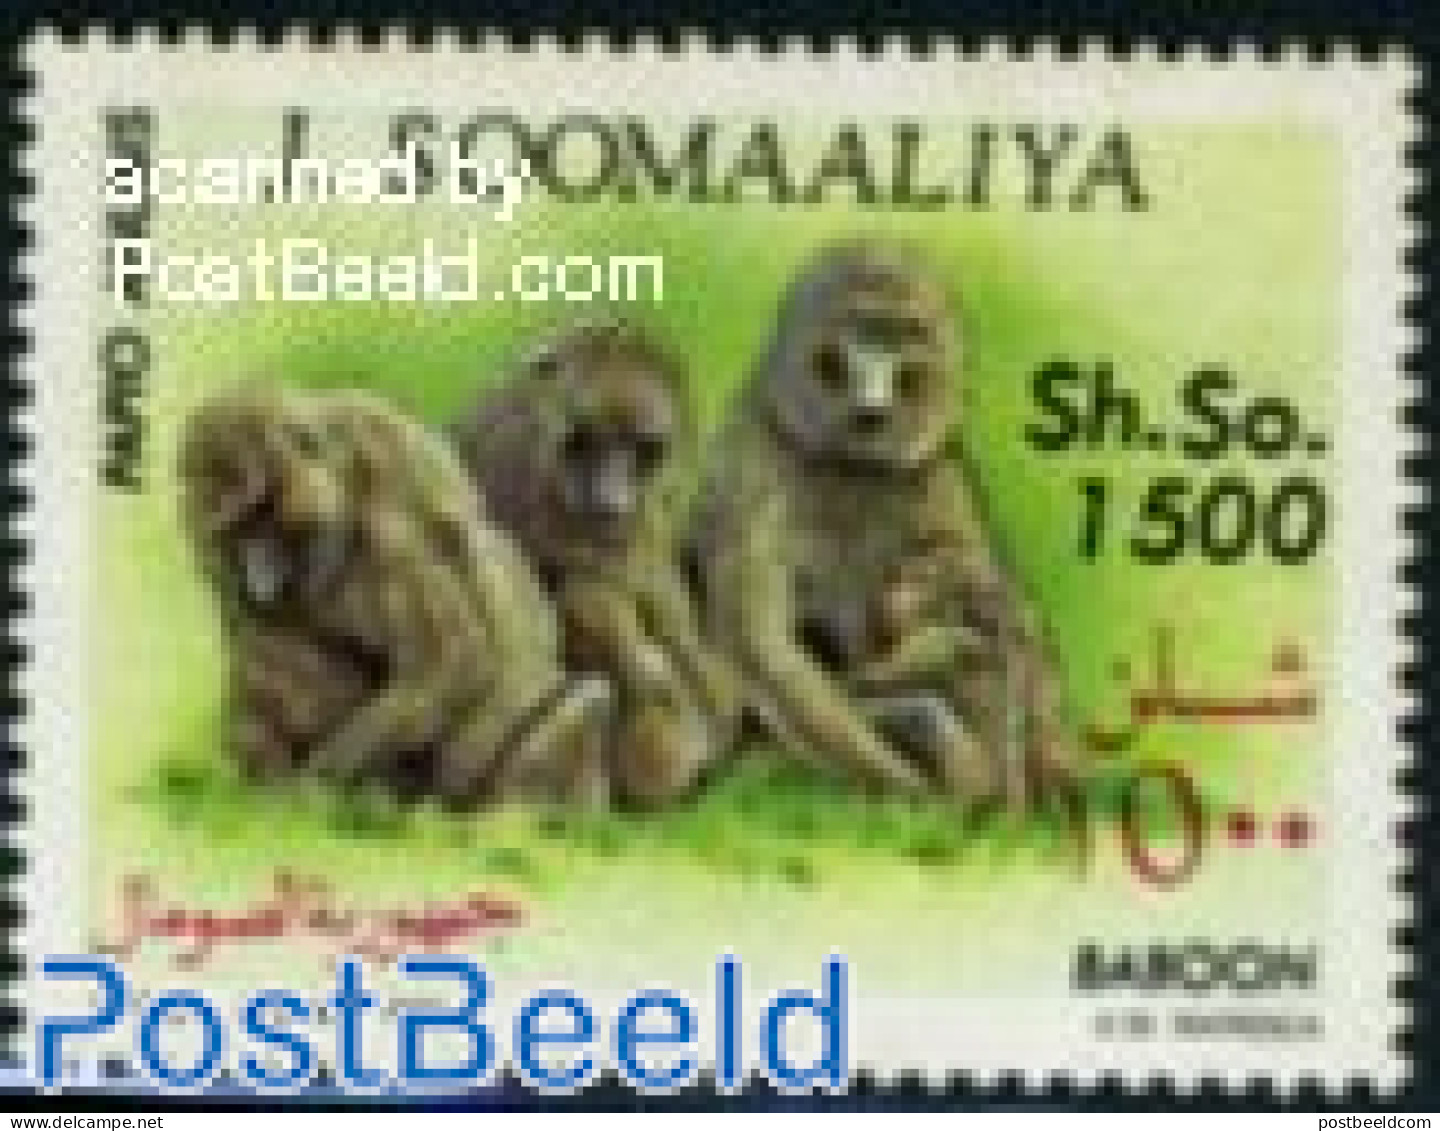 Somalia 1992 1500Sh., Stamp Out Of Set, Mint NH, Nature - Monkeys - Somalia (1960-...)